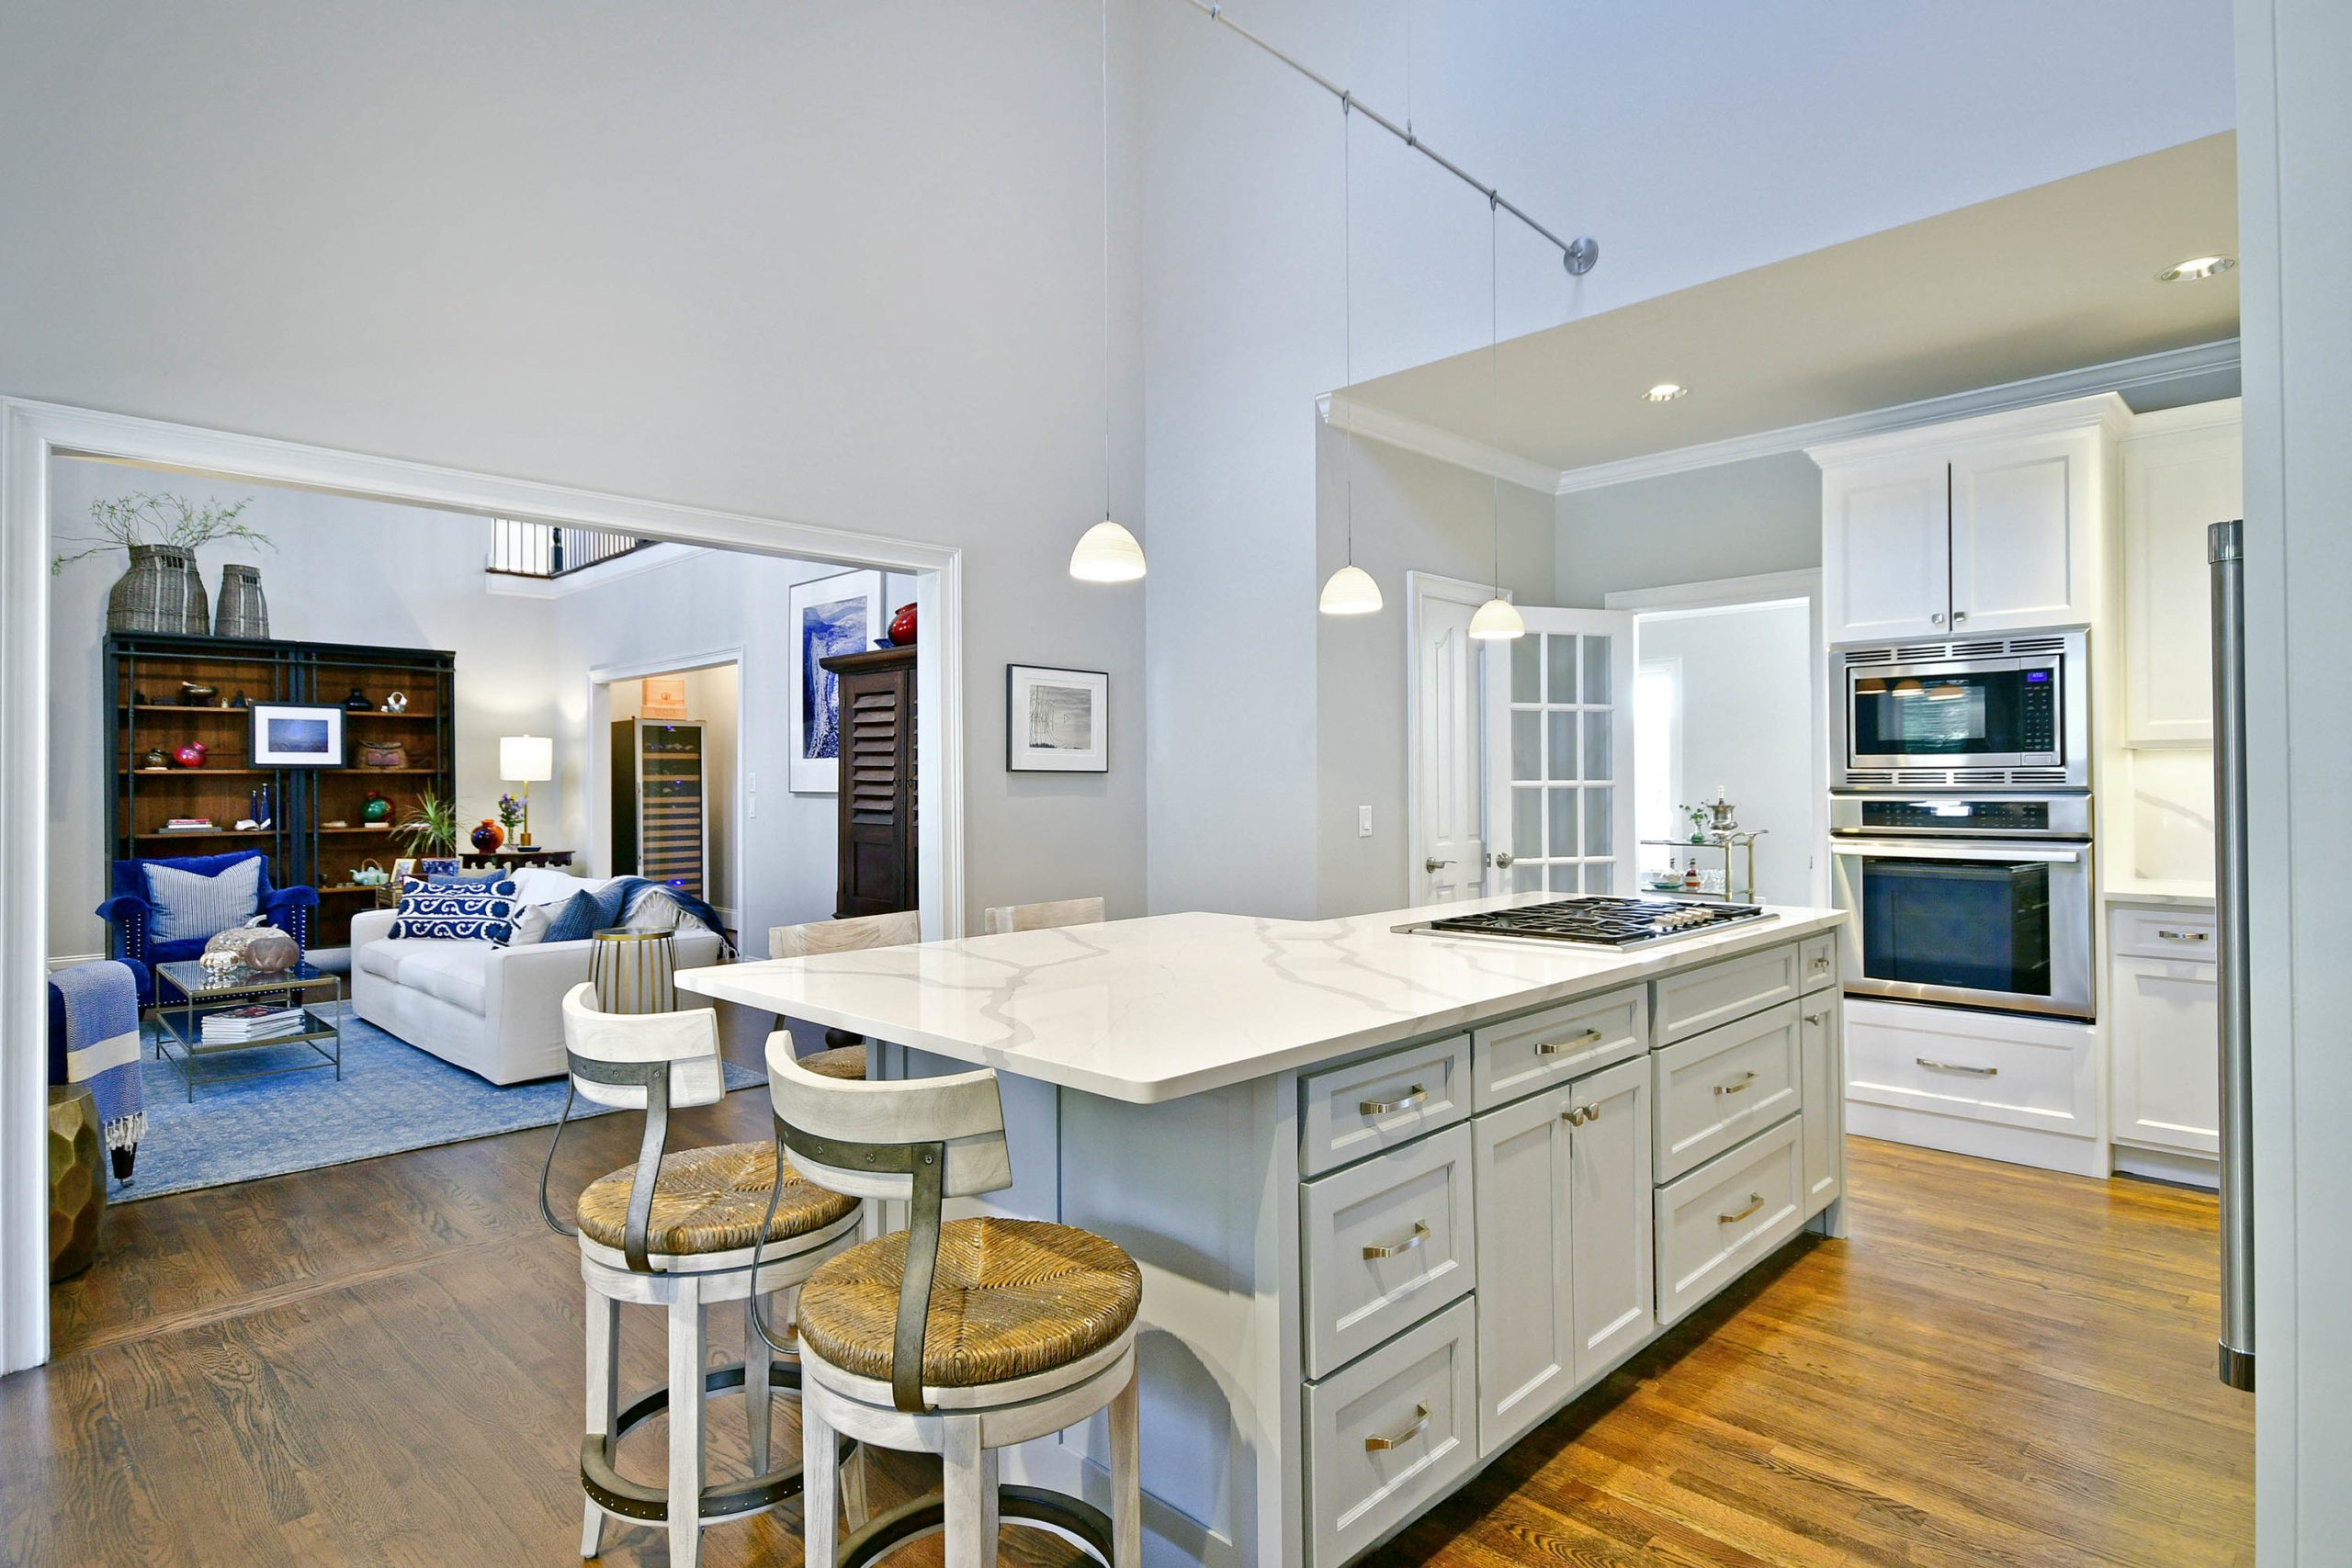 Real Estate Photoshoot Kitchen Area